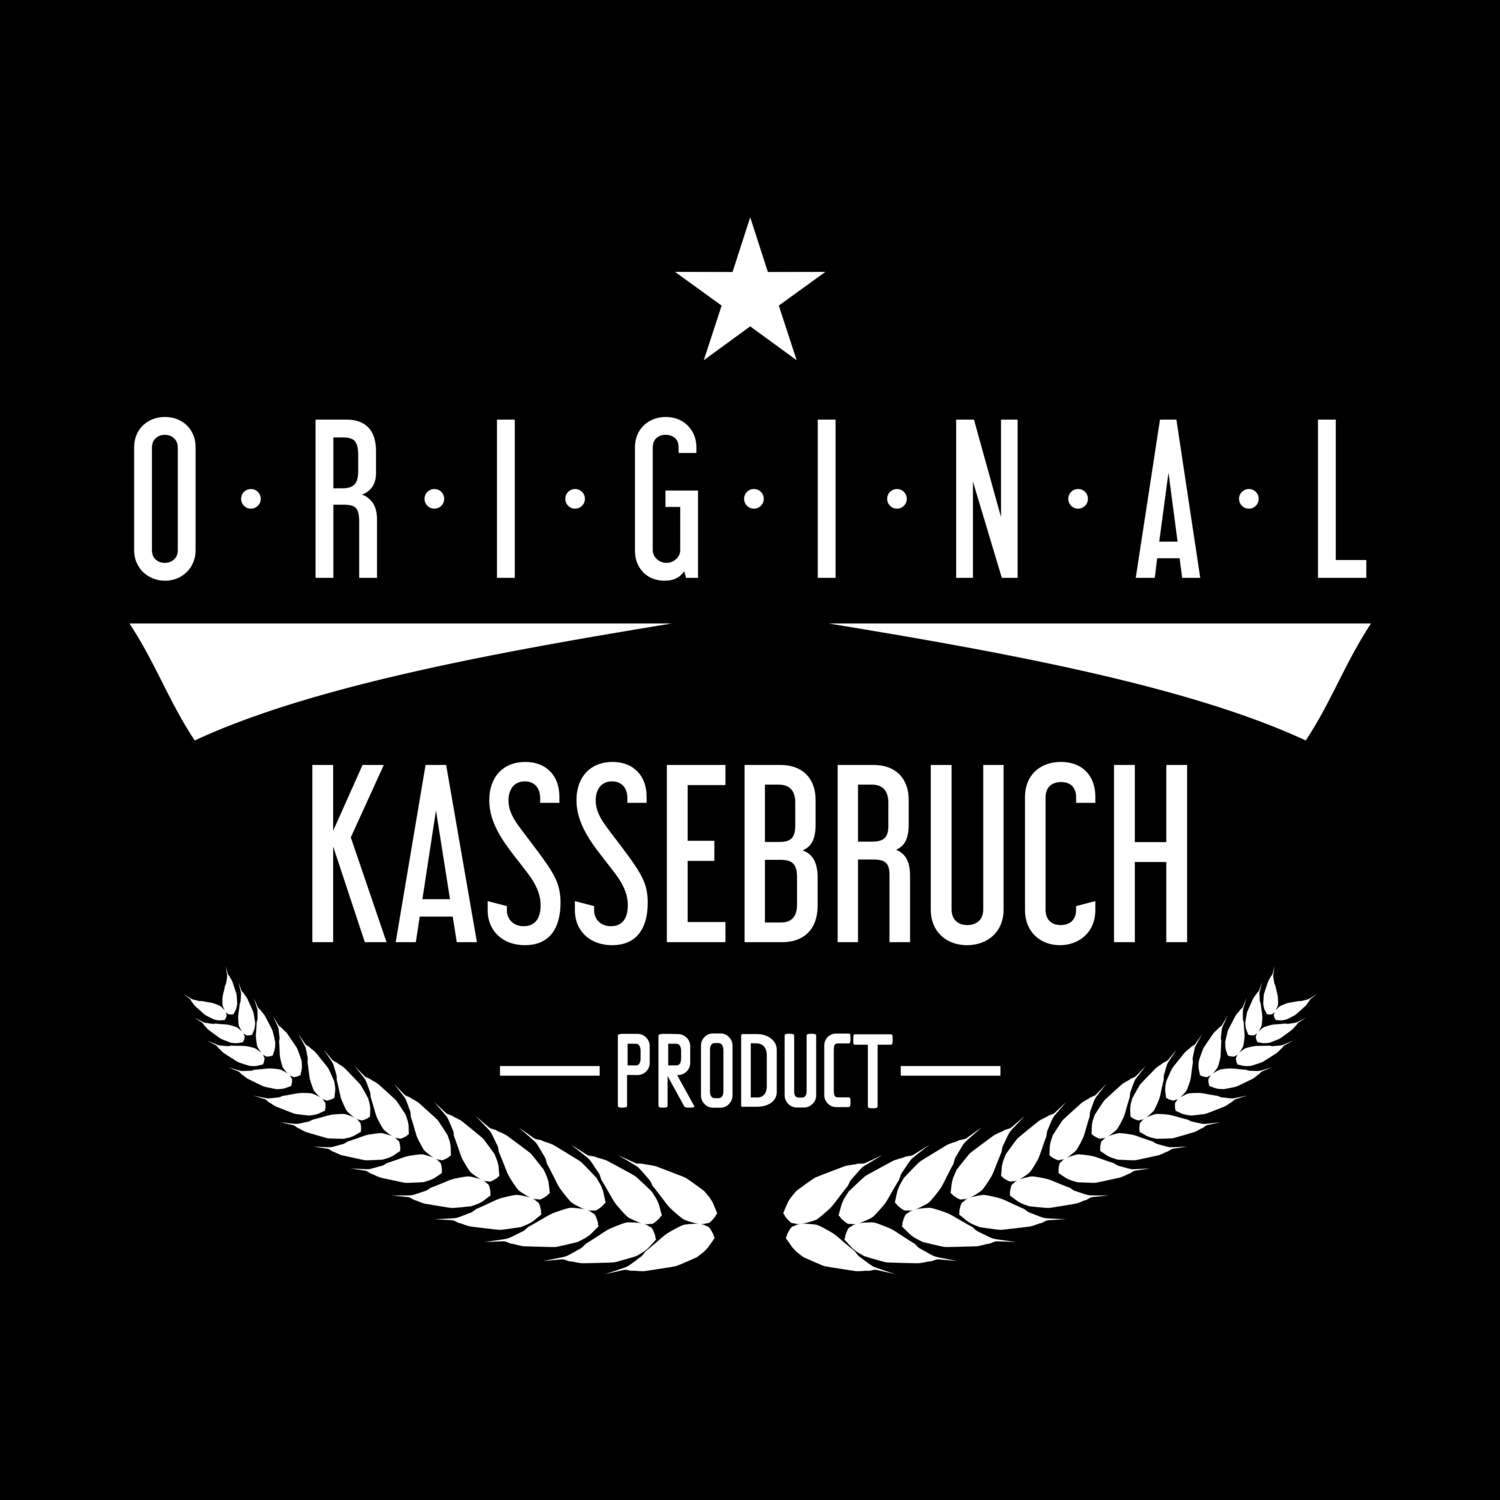 Kassebruch T-Shirt »Original Product«